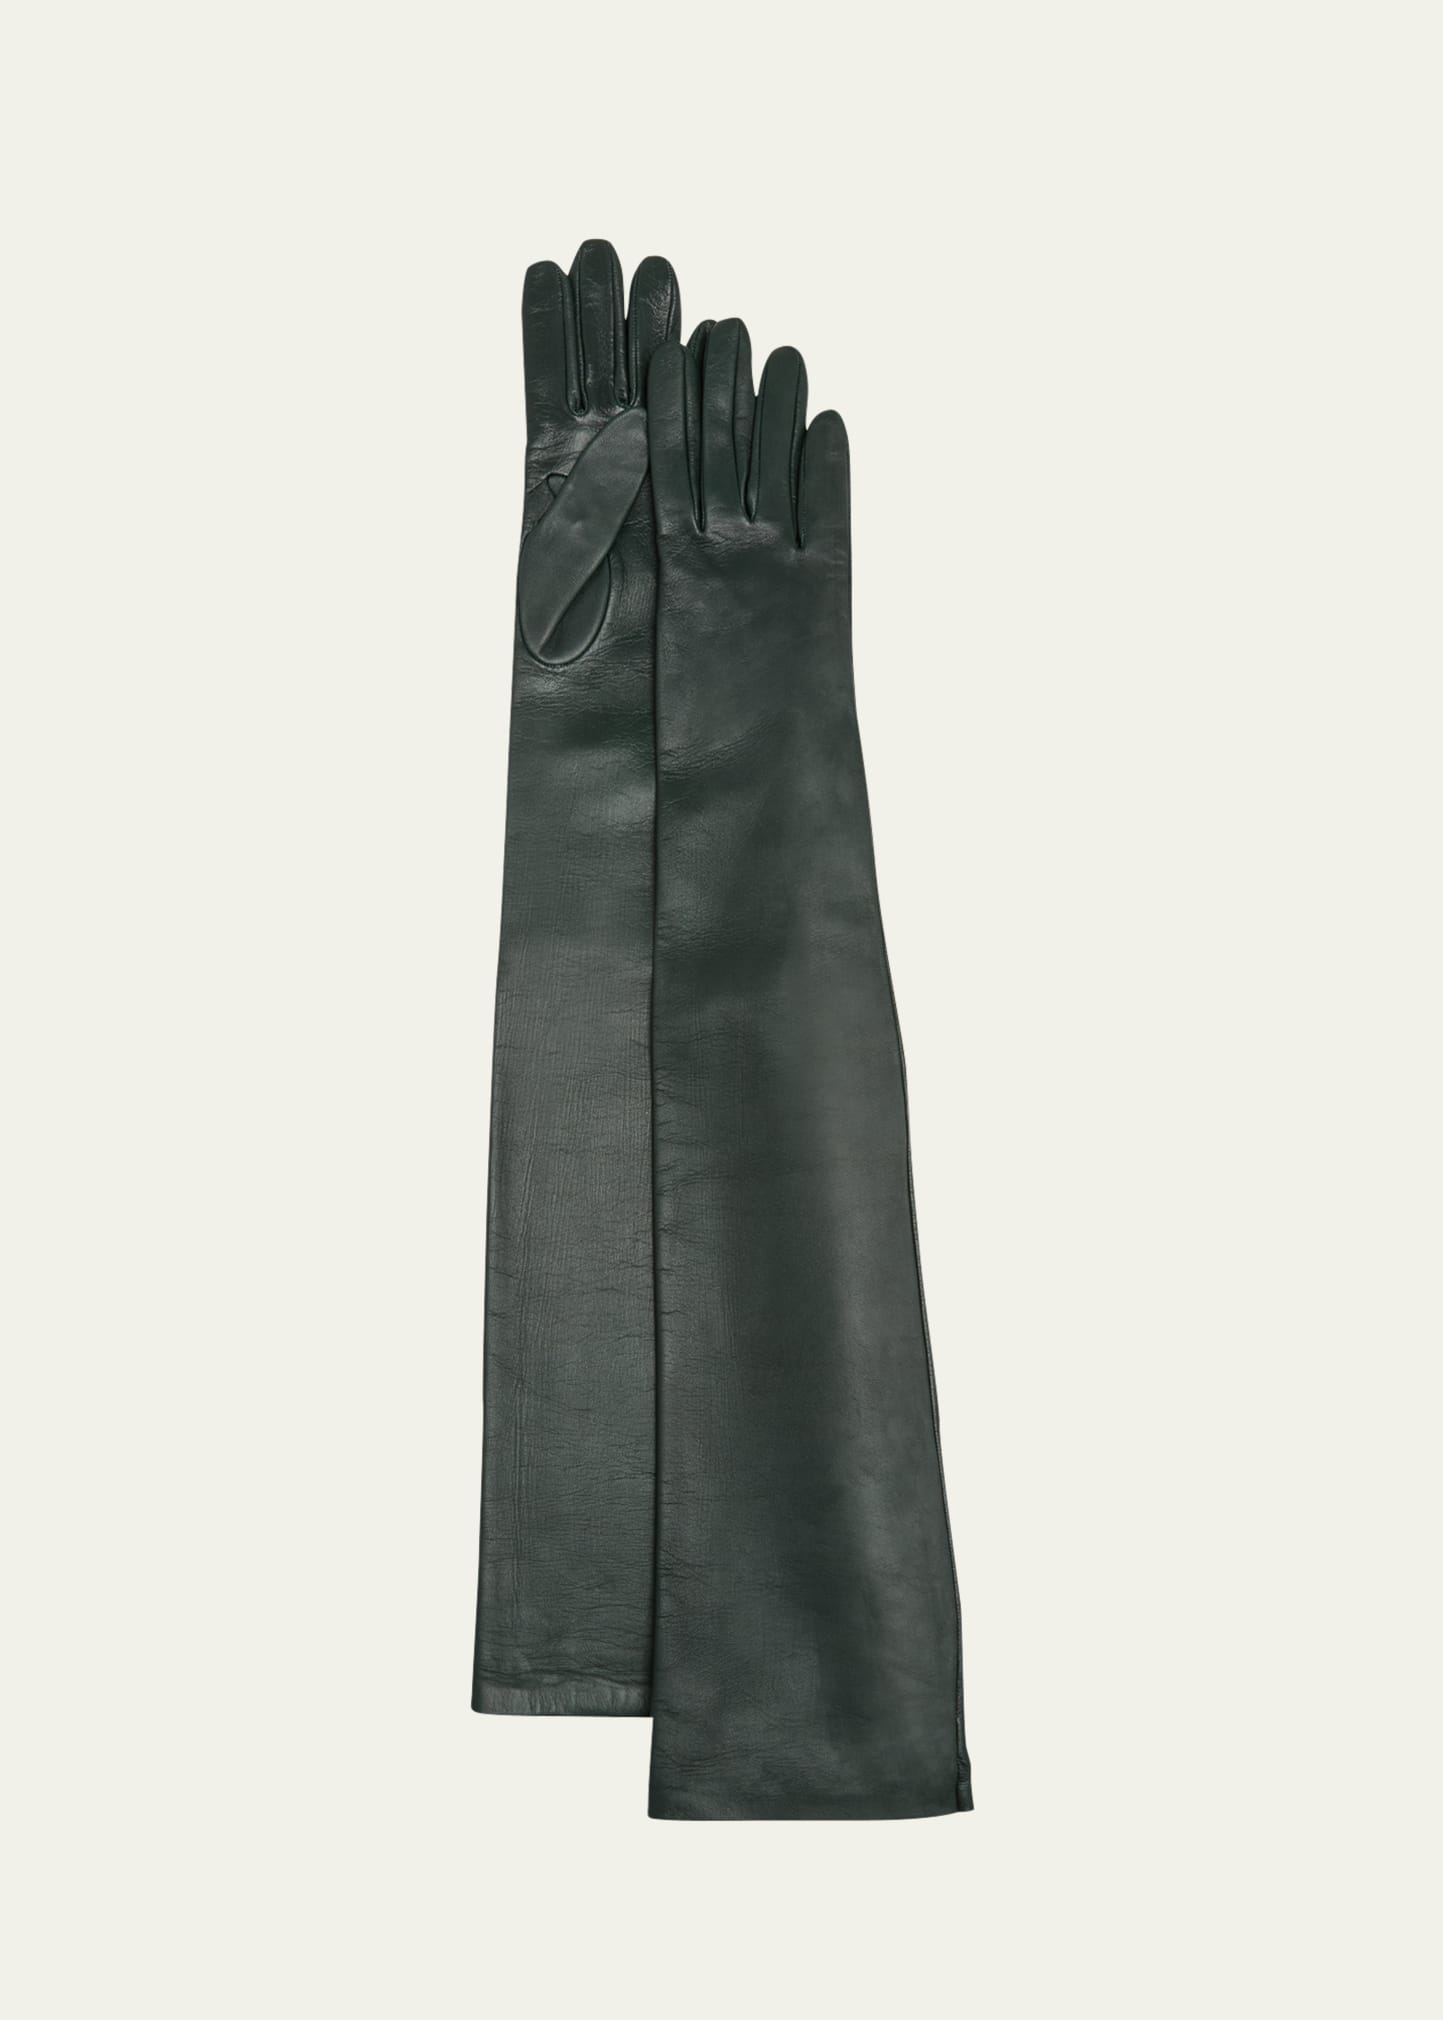 Simon Wool Gloves